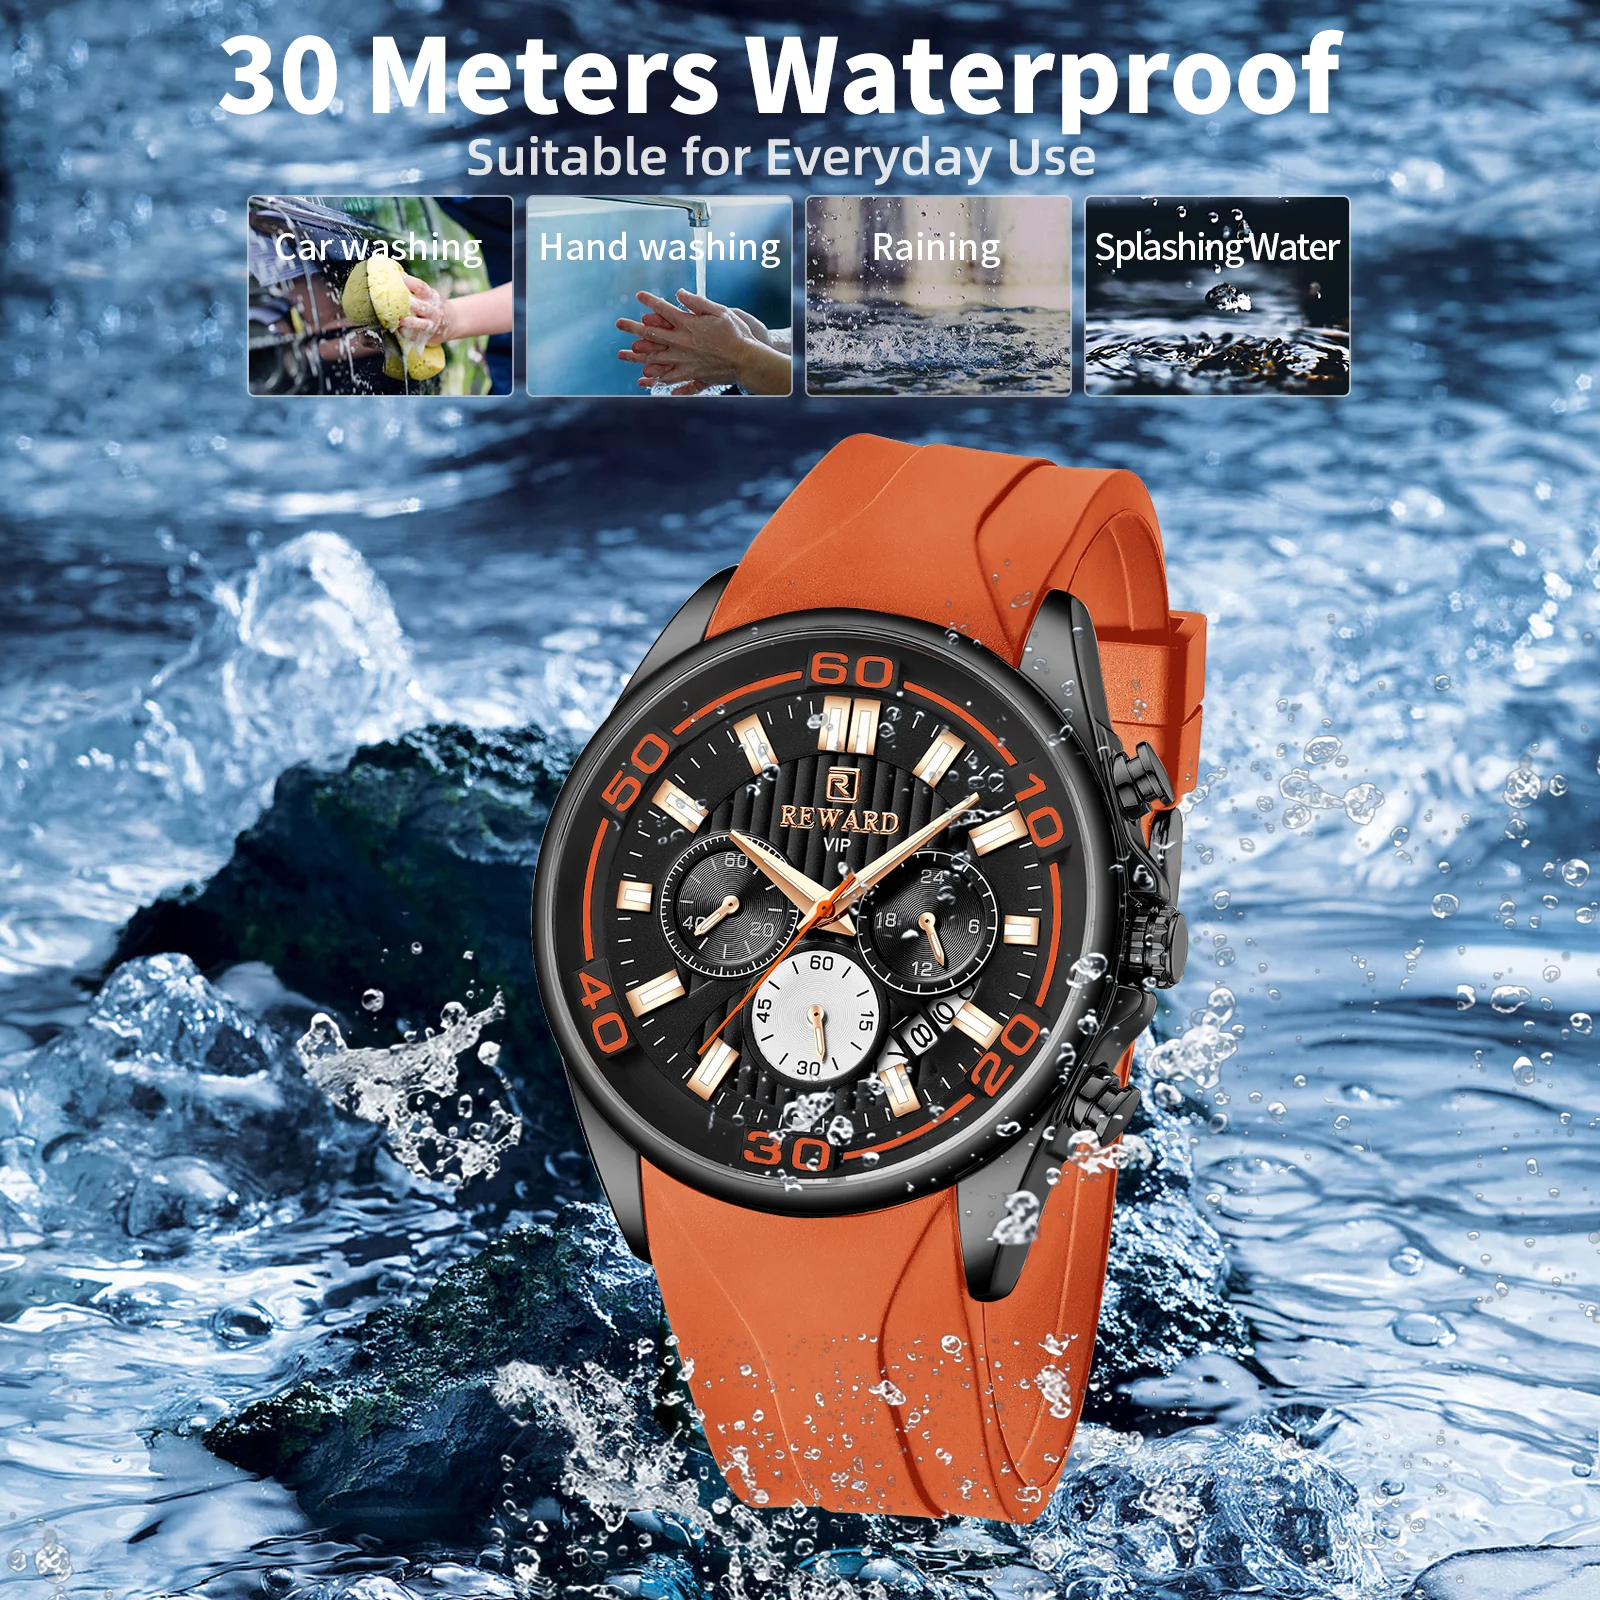 Reward Watch Factory Quartz Watch For Men Fashion Waterproof Chronograph Luxury Watch OEM/ODM RD83036M